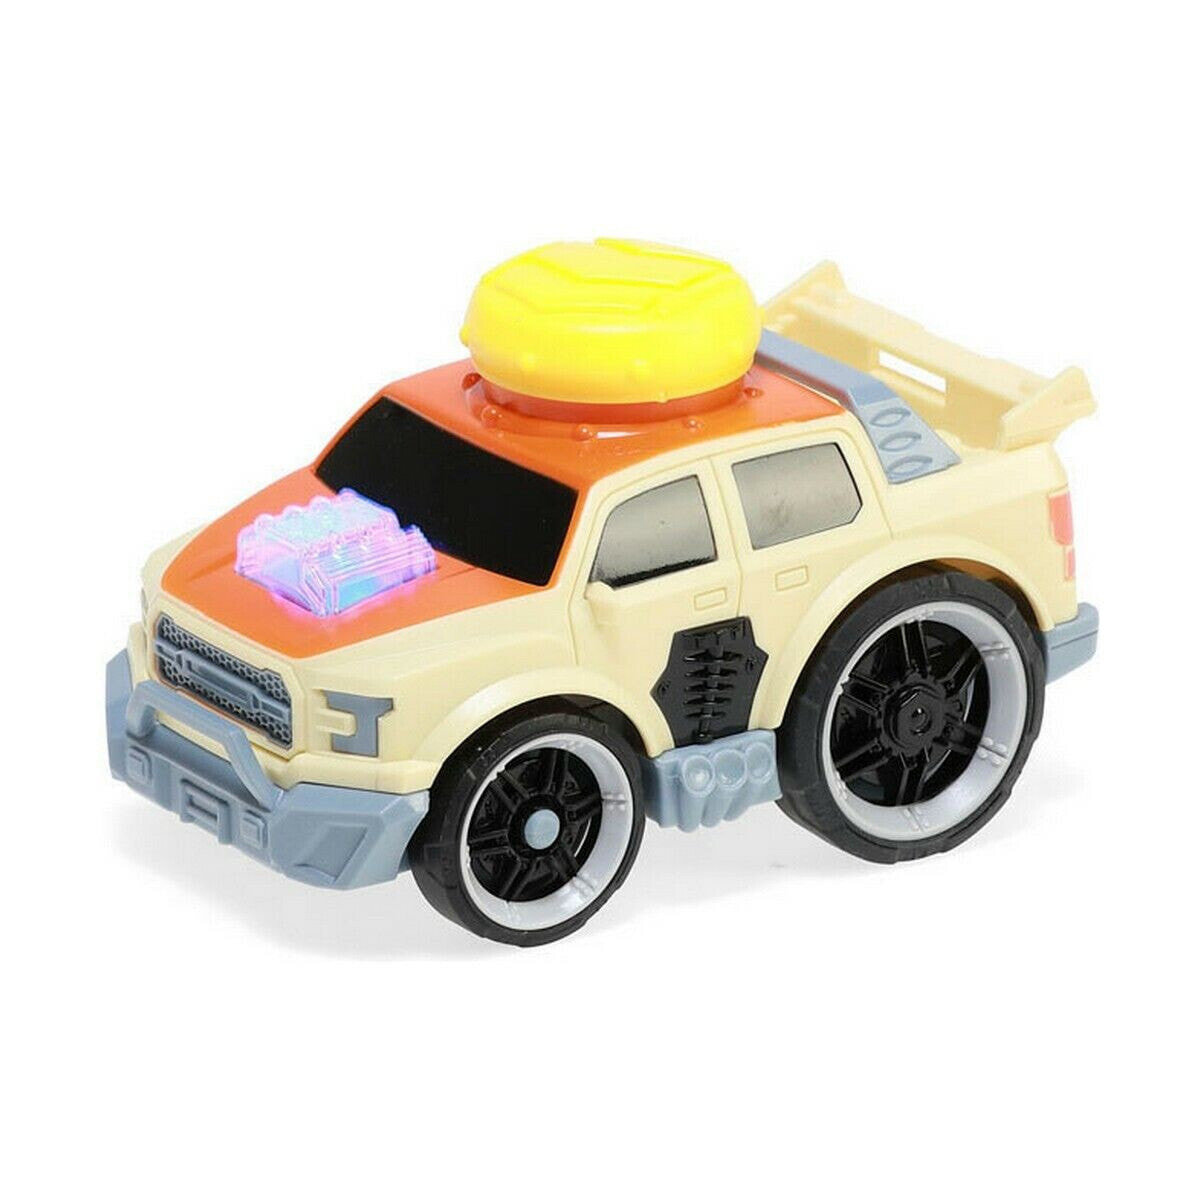 Toy car Crash Stunt Orange